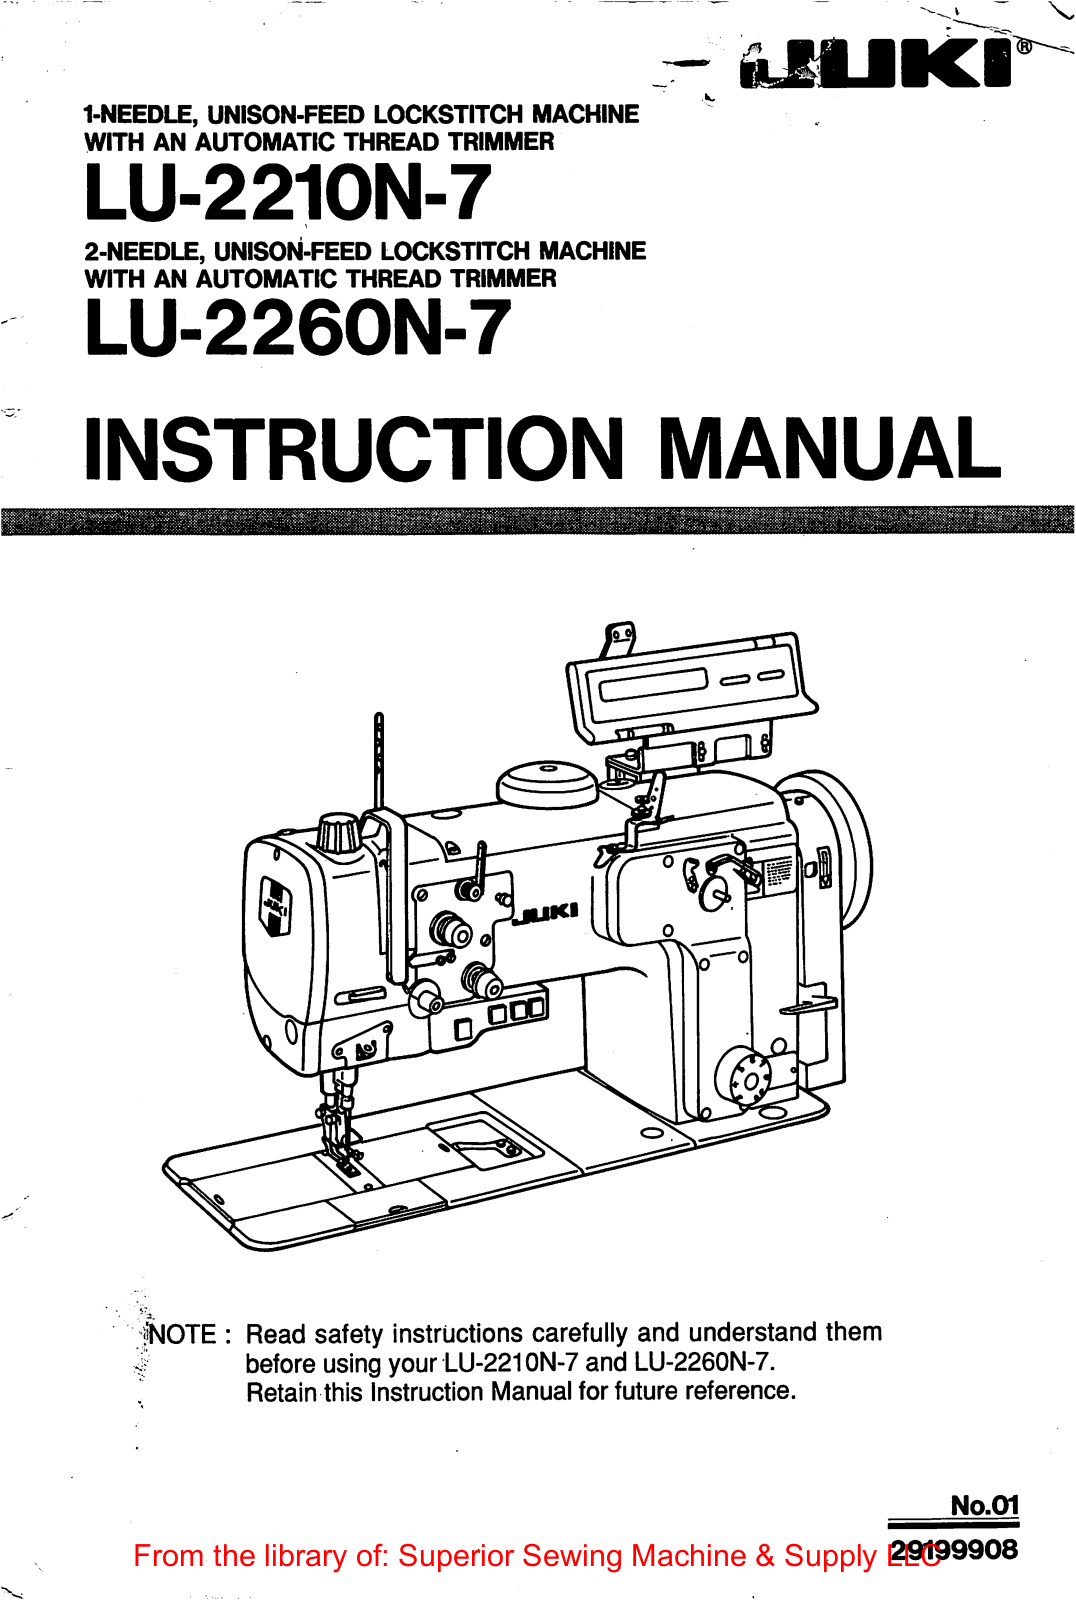 Juki LU-2210N-7, LU-2260N-7 Instruction Manual